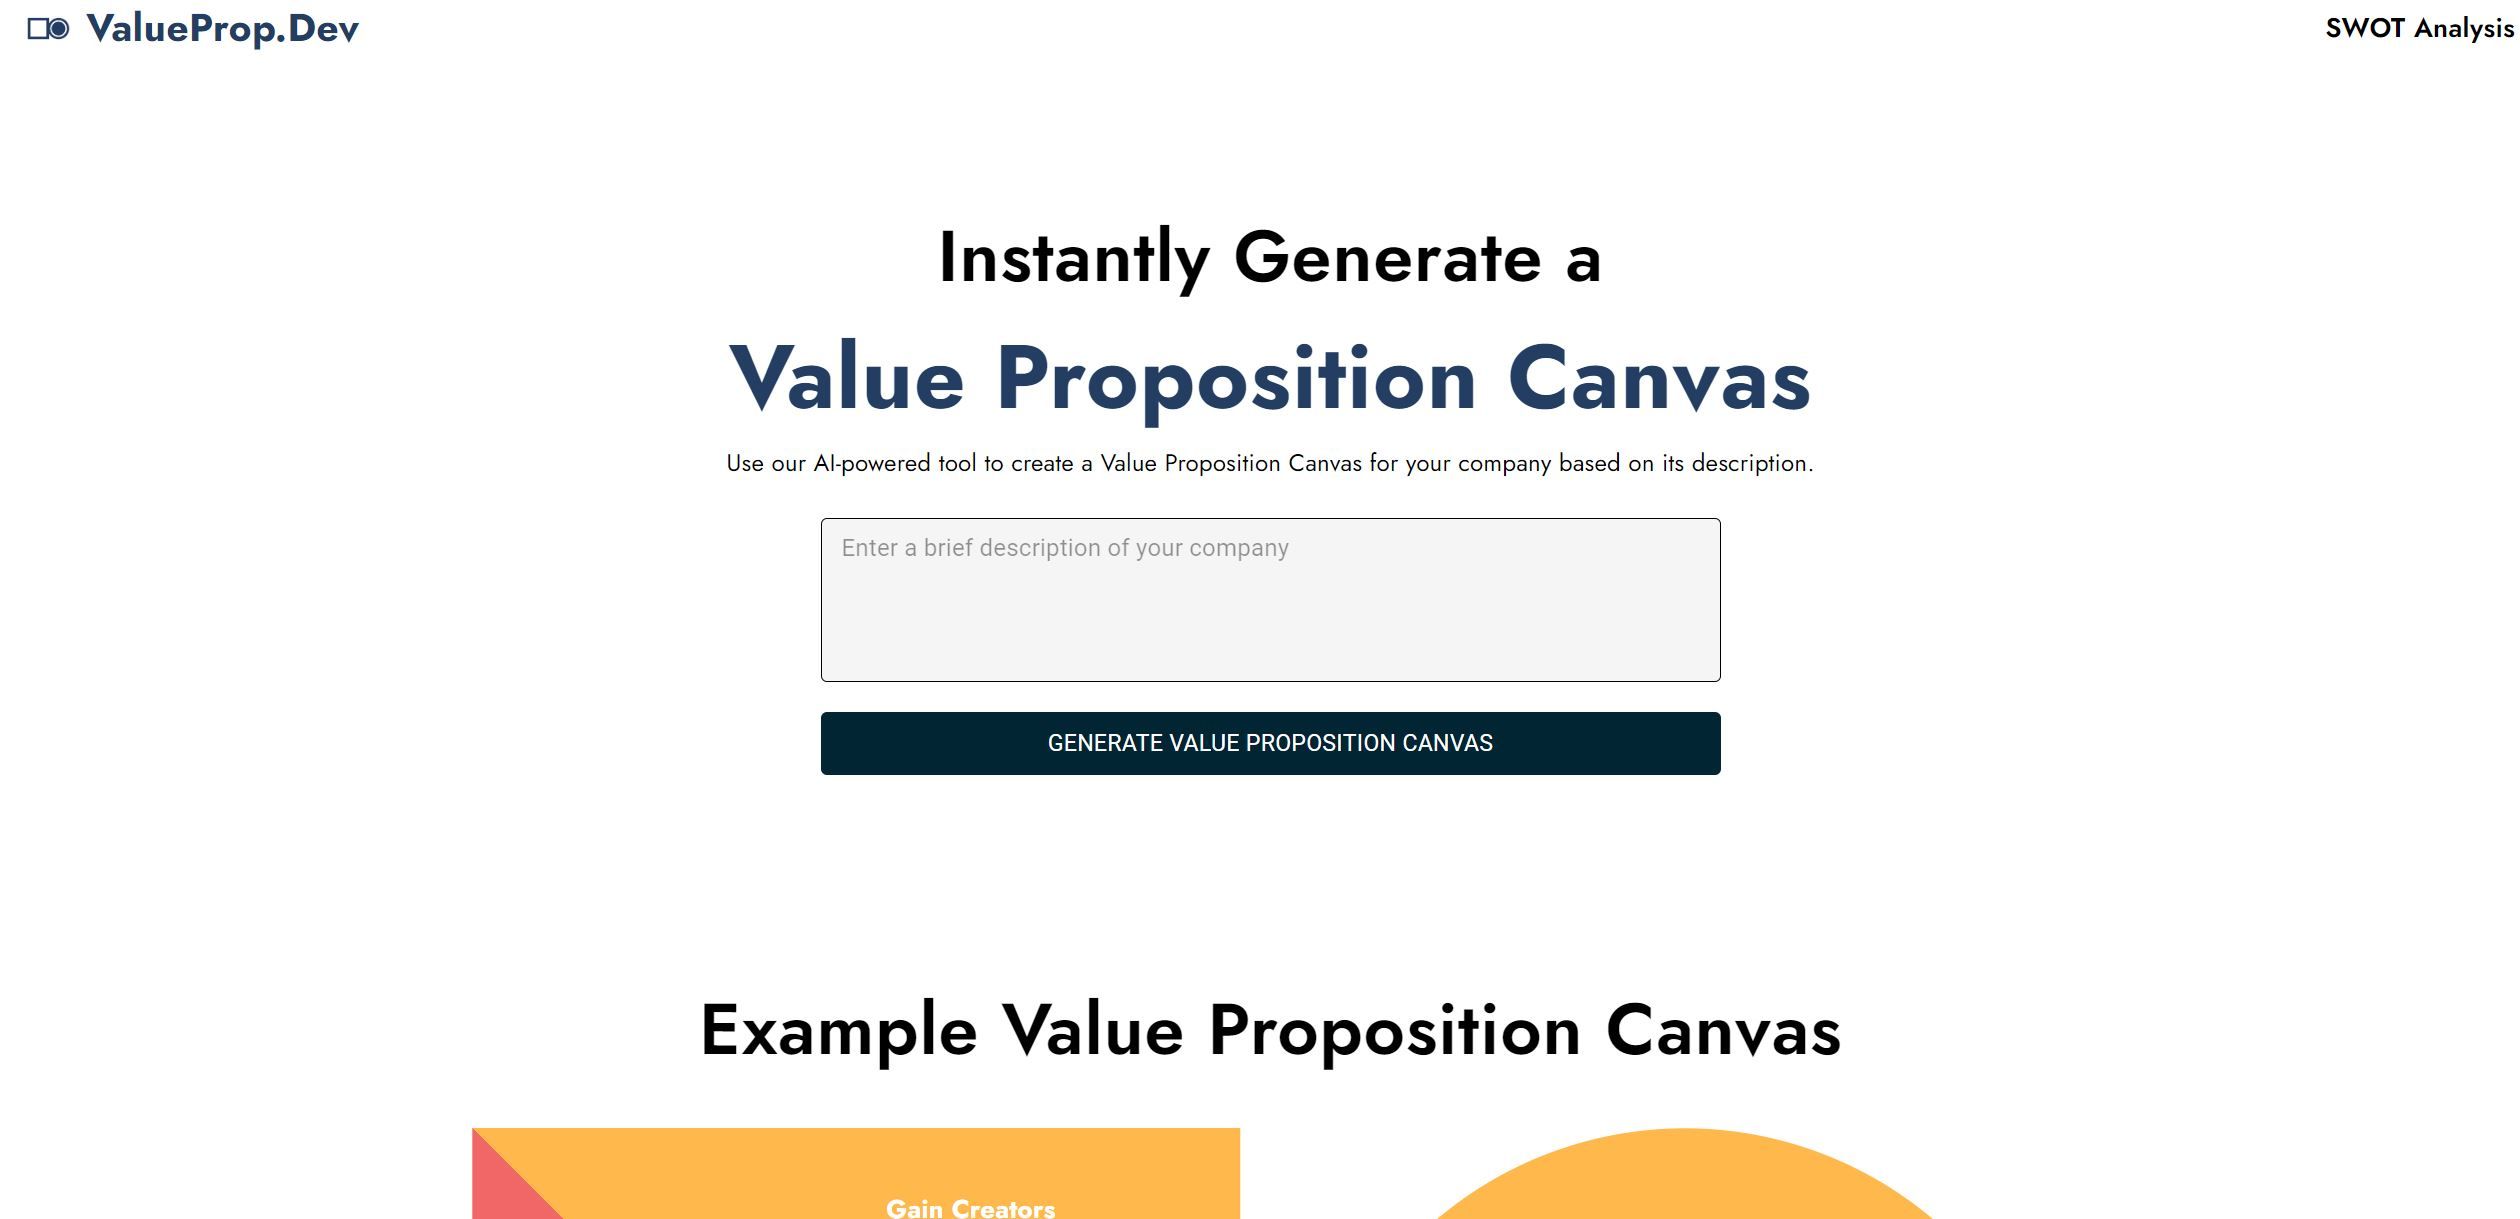 Post: Value Prop Canvas